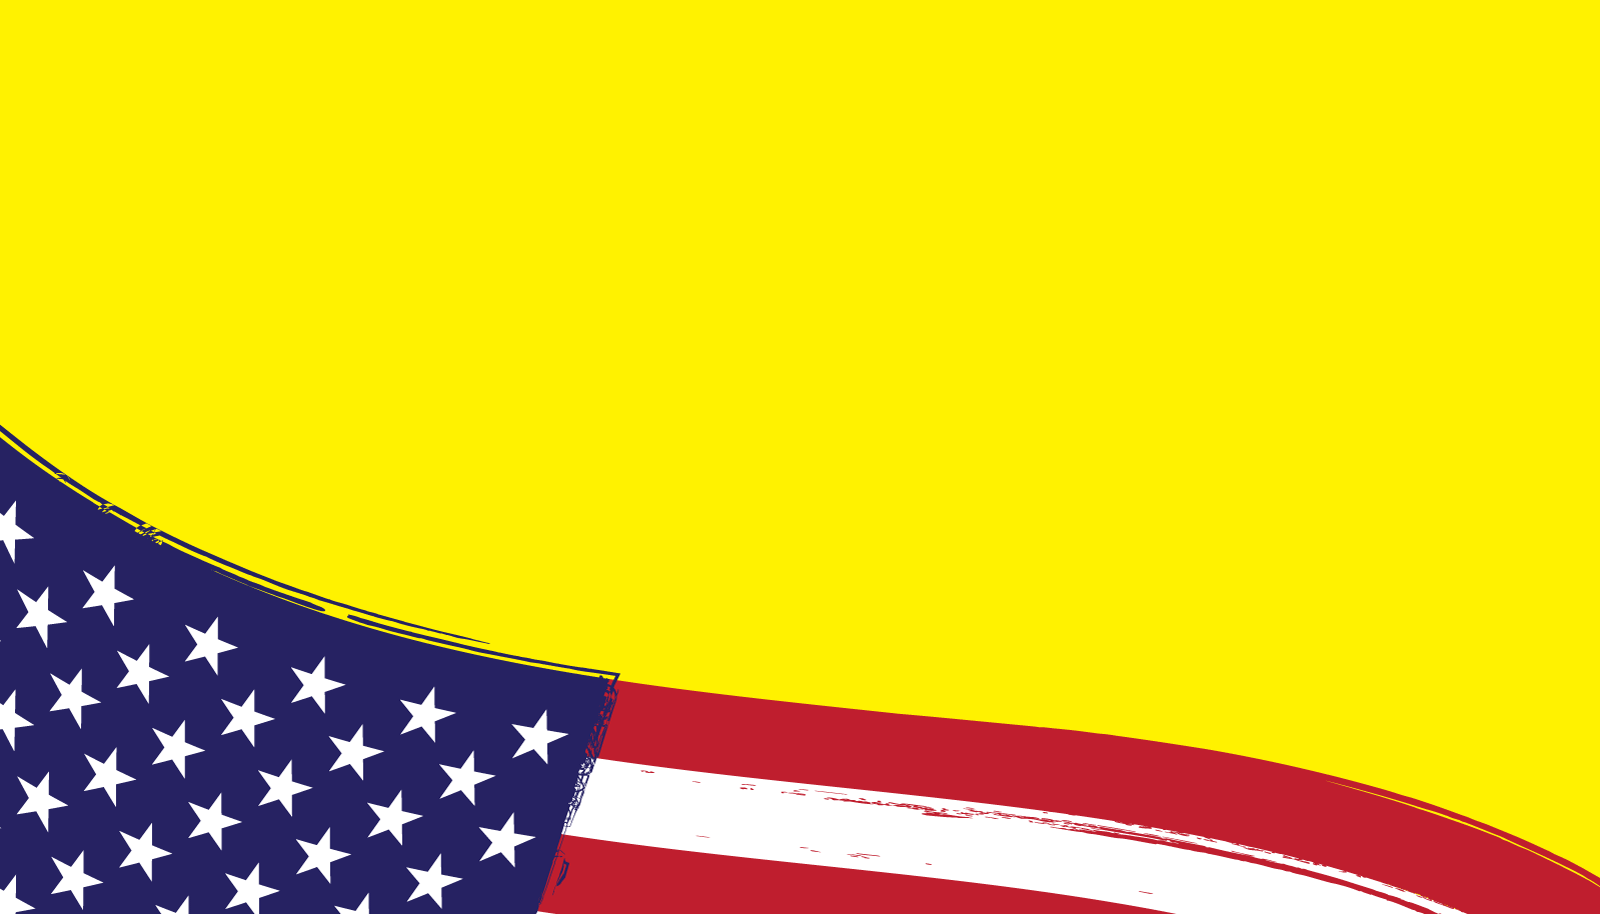 American flag illustration vector design